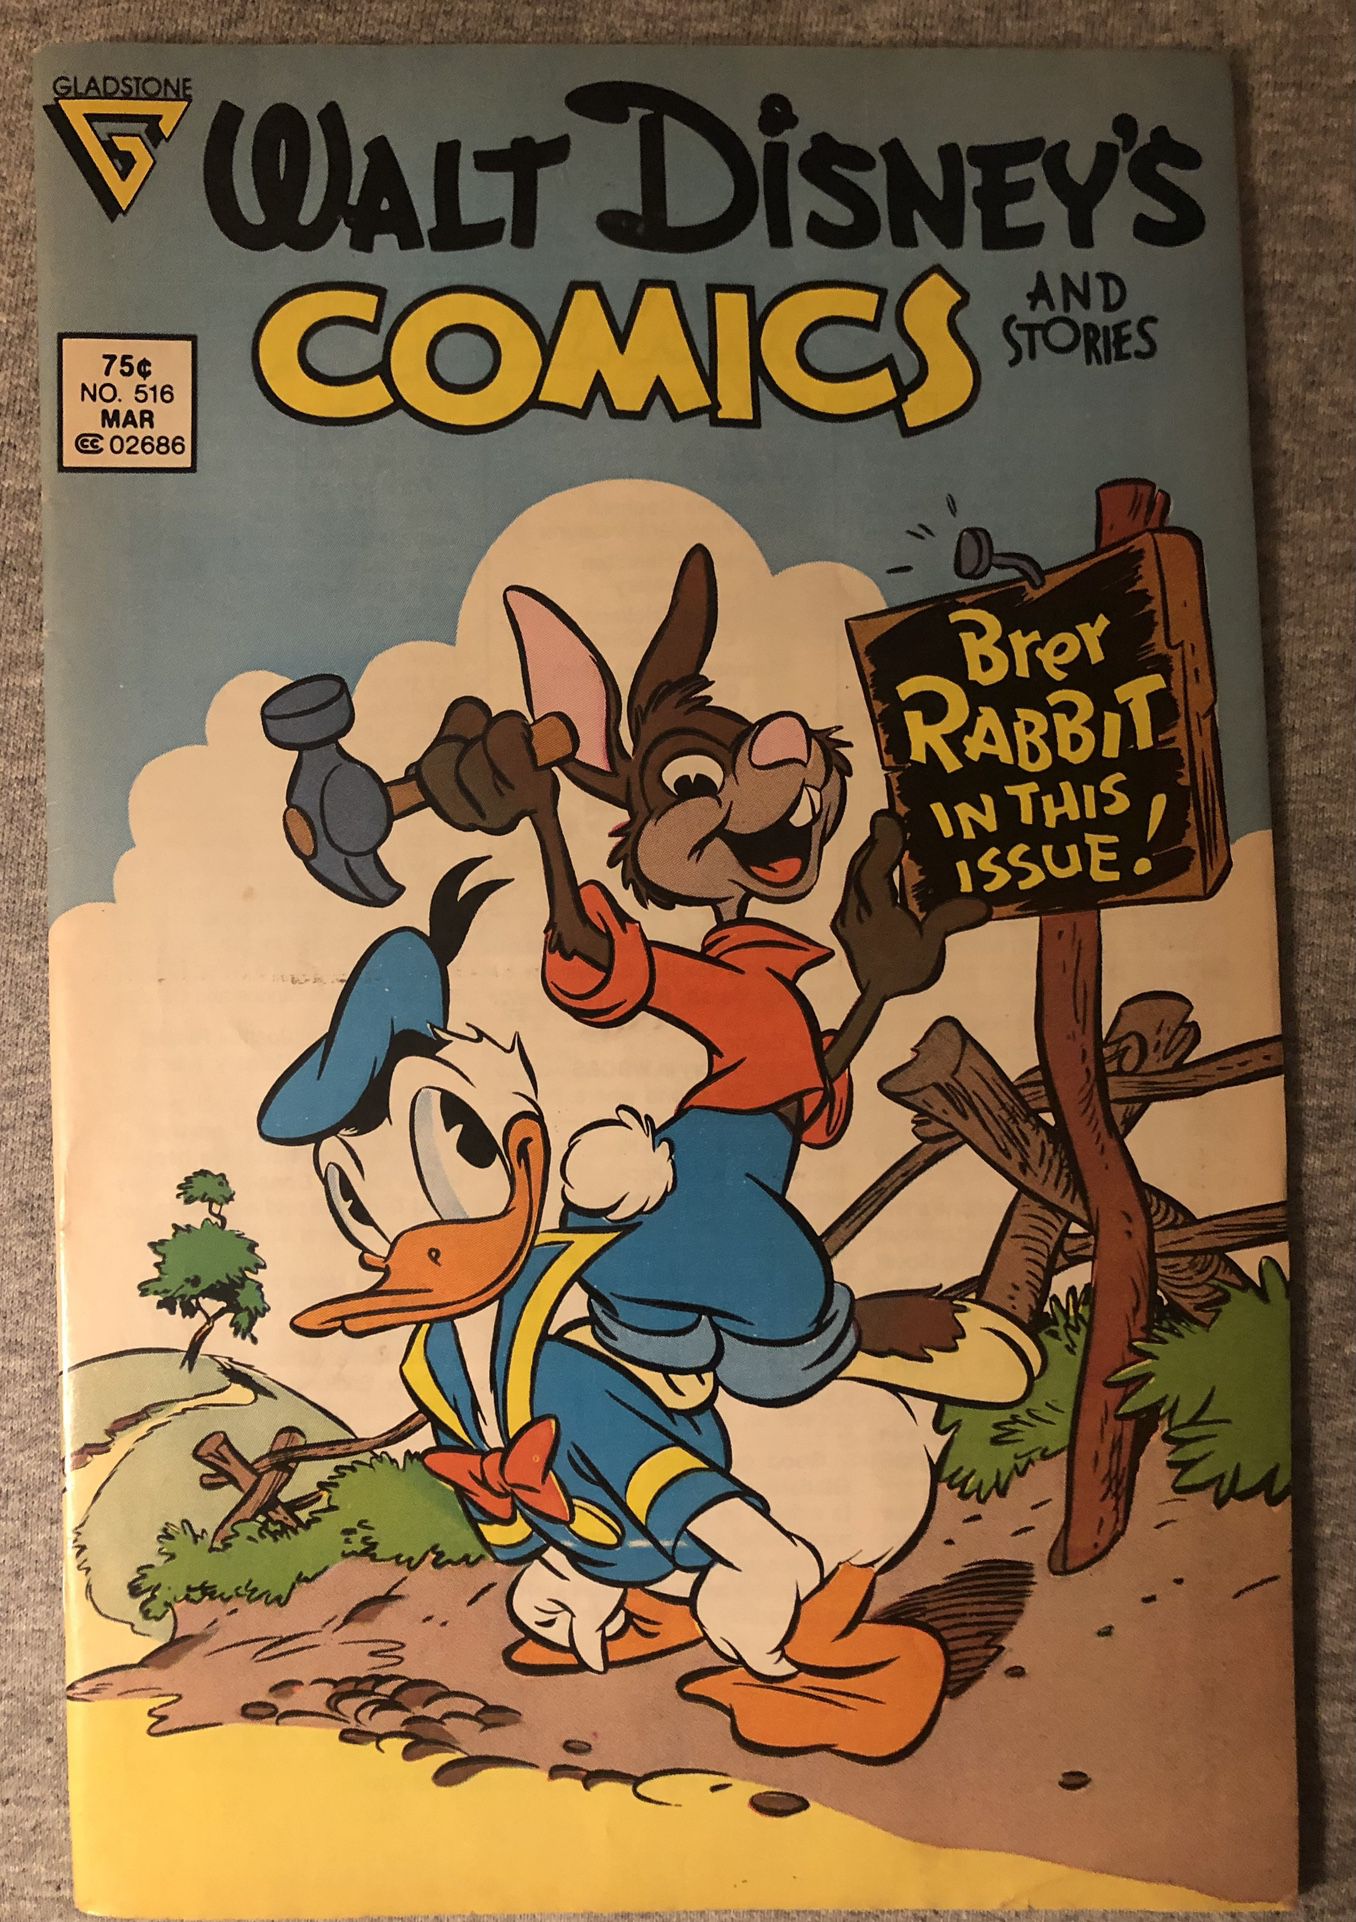 Walt Disney’s Comics & Stories, #516 March ‘87